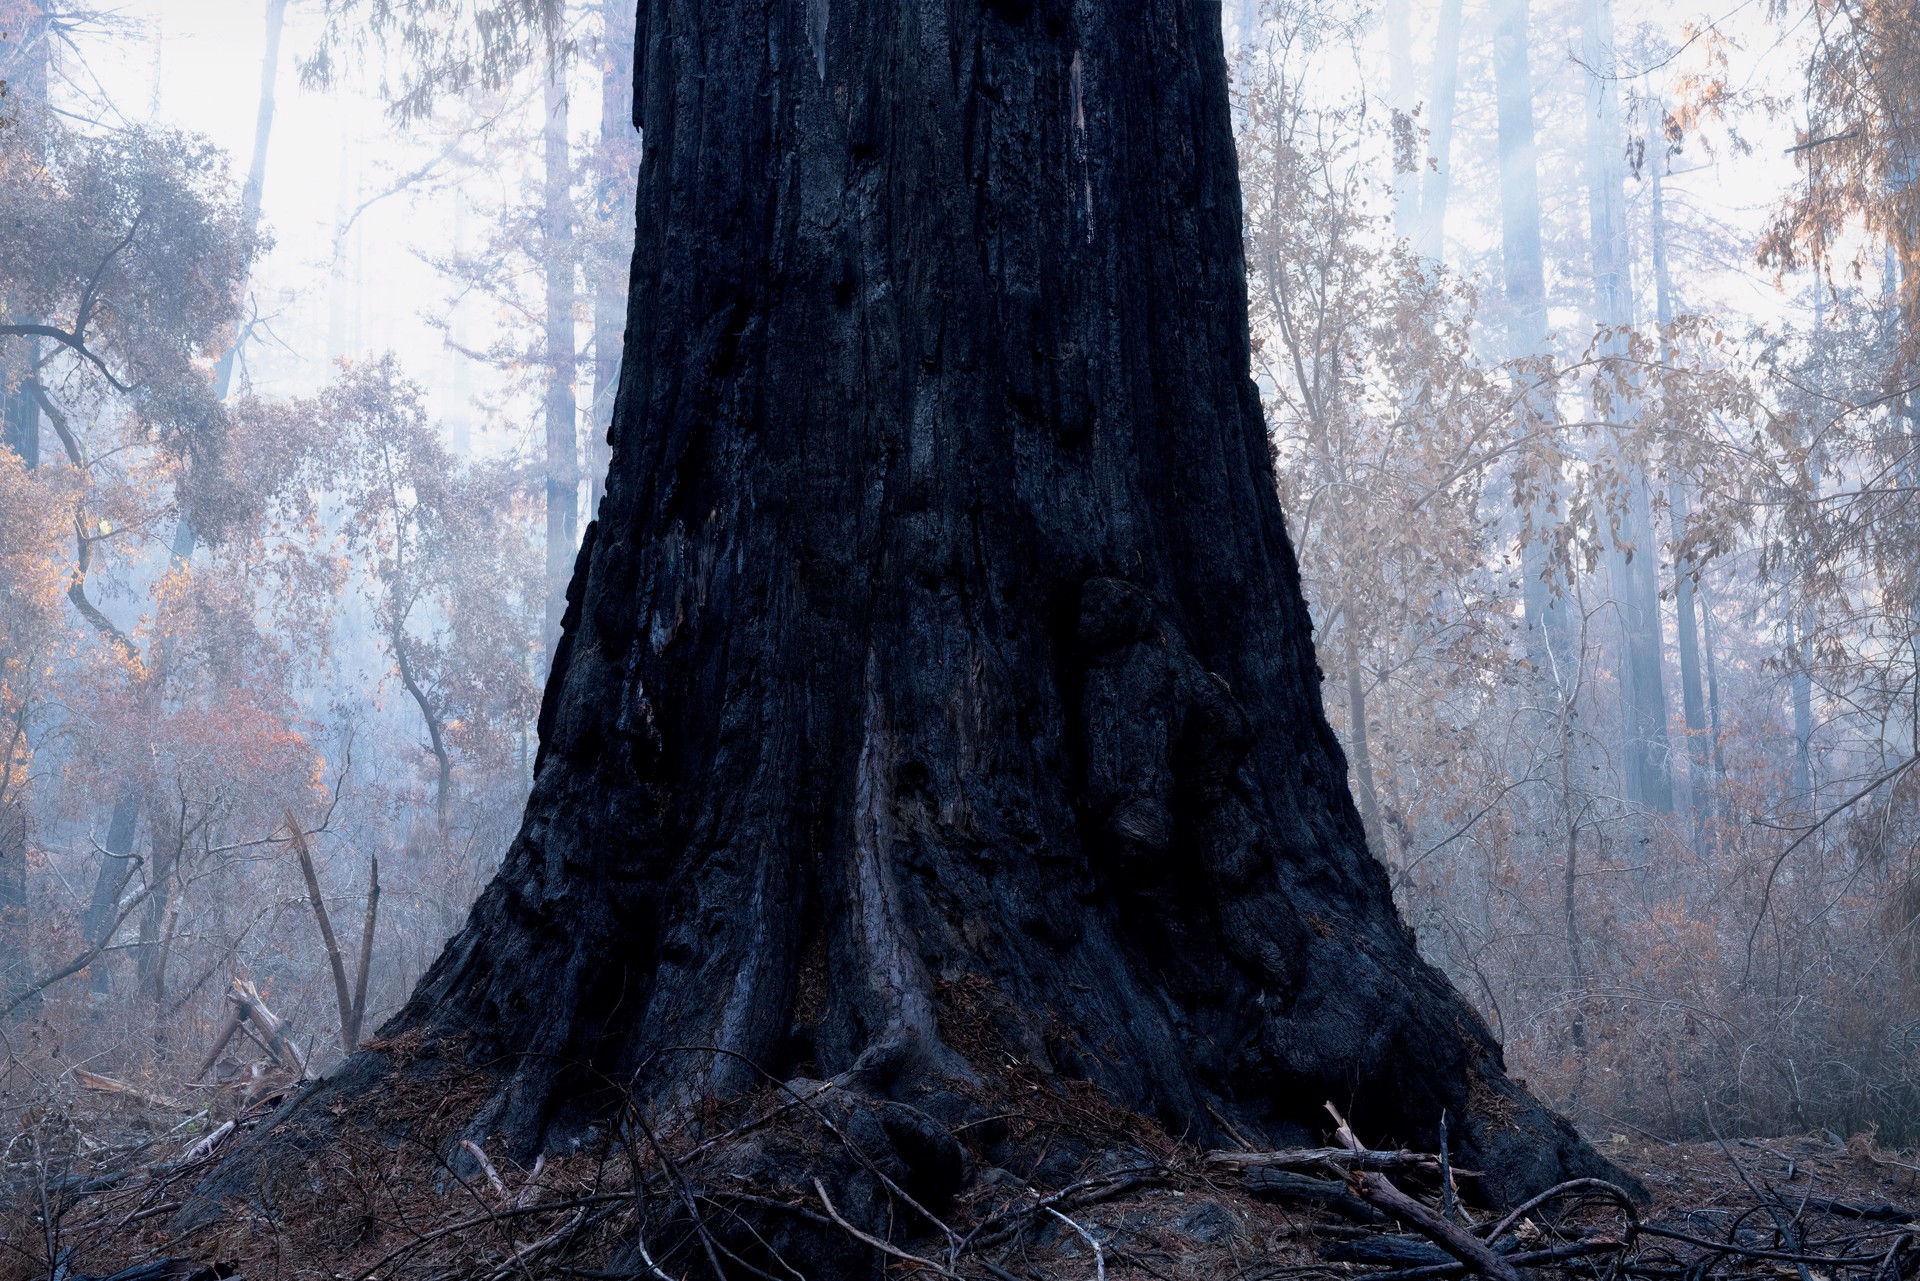 Redwood #4 (Big Basin Burn) by Sarah Bird